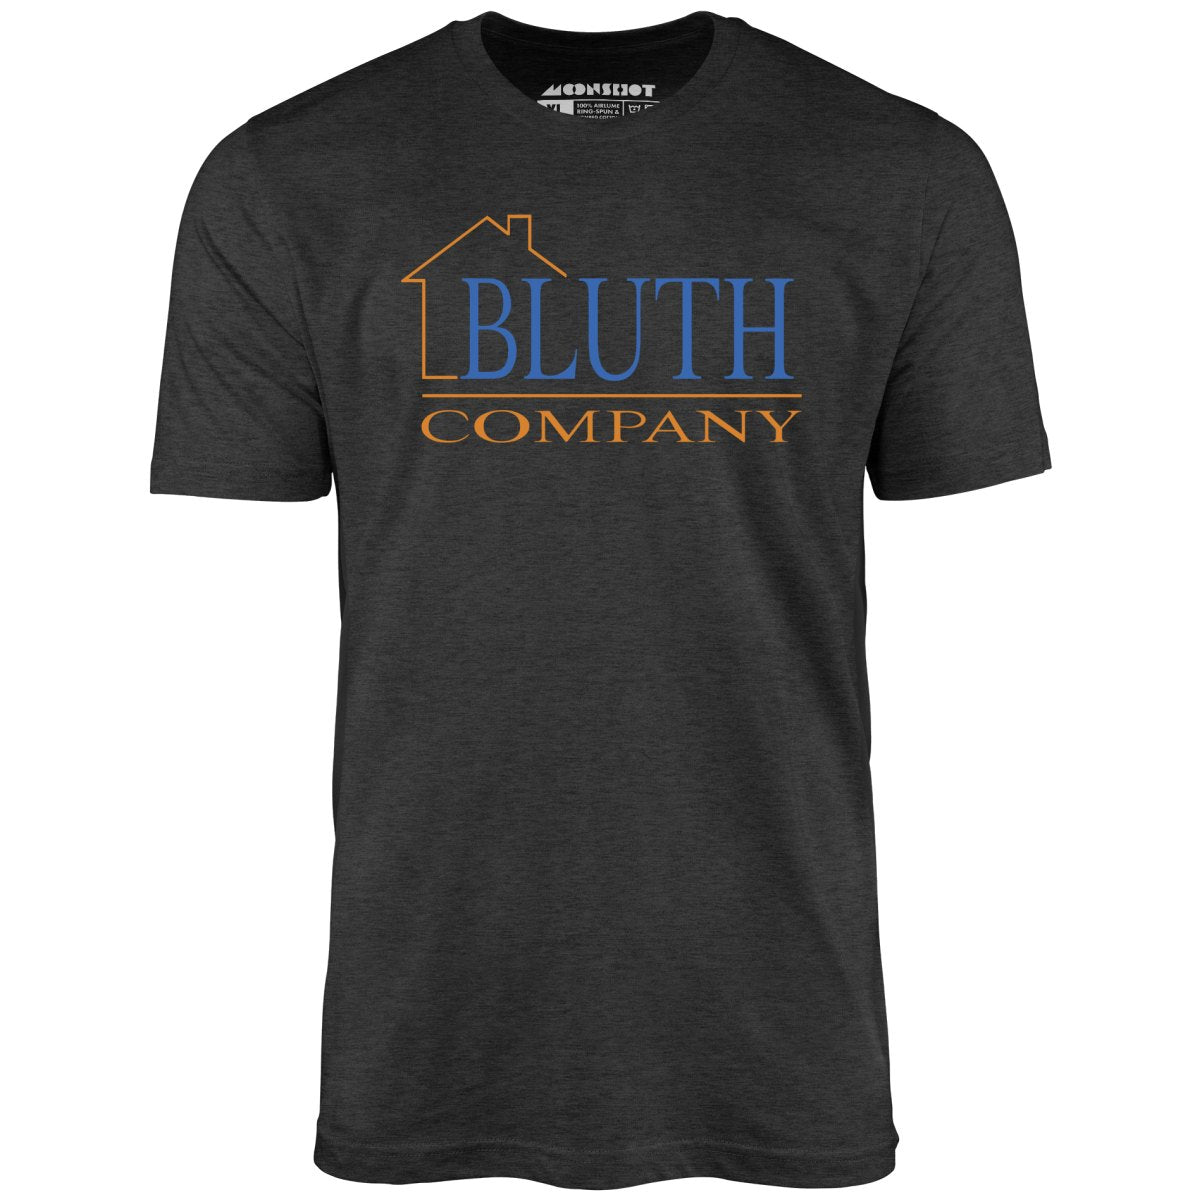 Bluth Company - Unisex T-Shirt